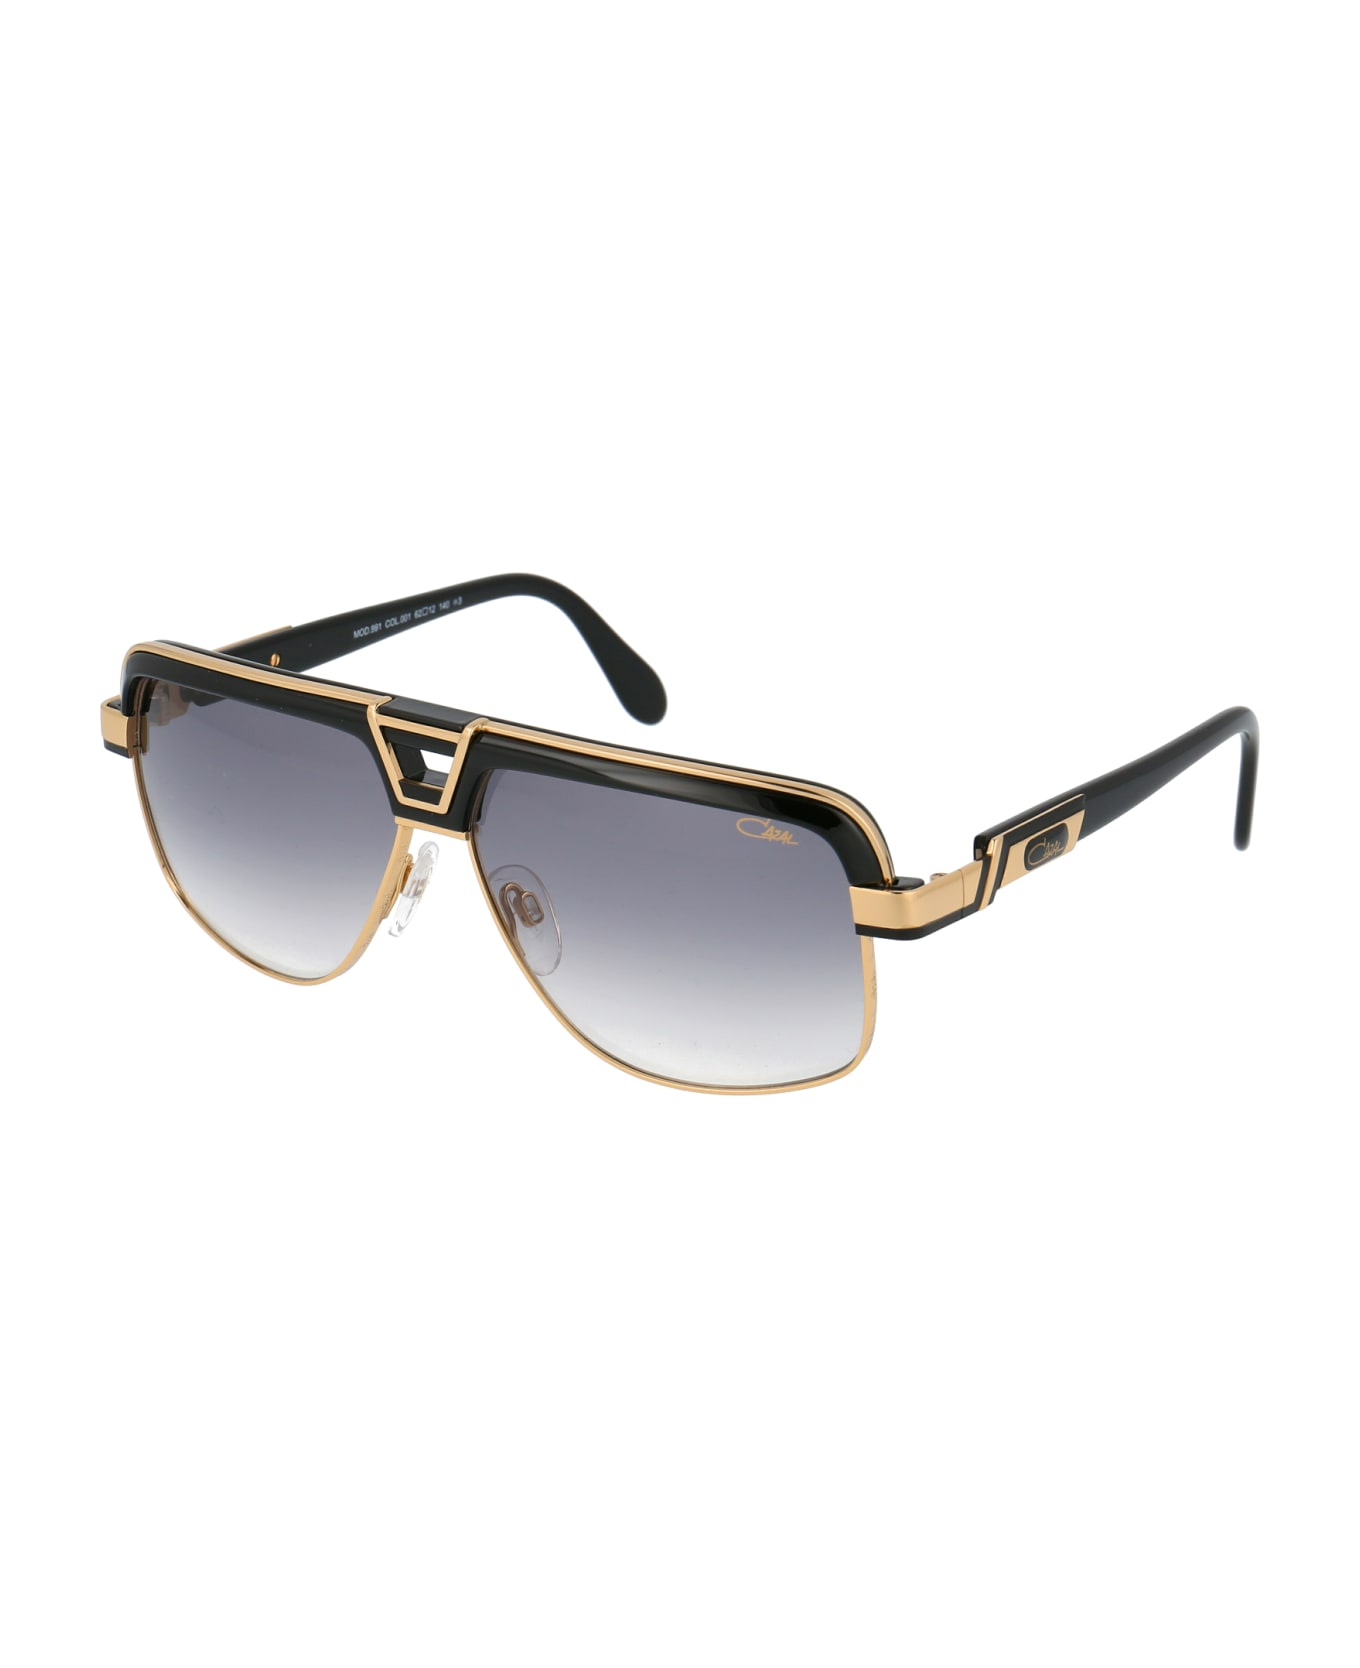 Cazal Mod. 991 Sunglasses - 001 BLACK